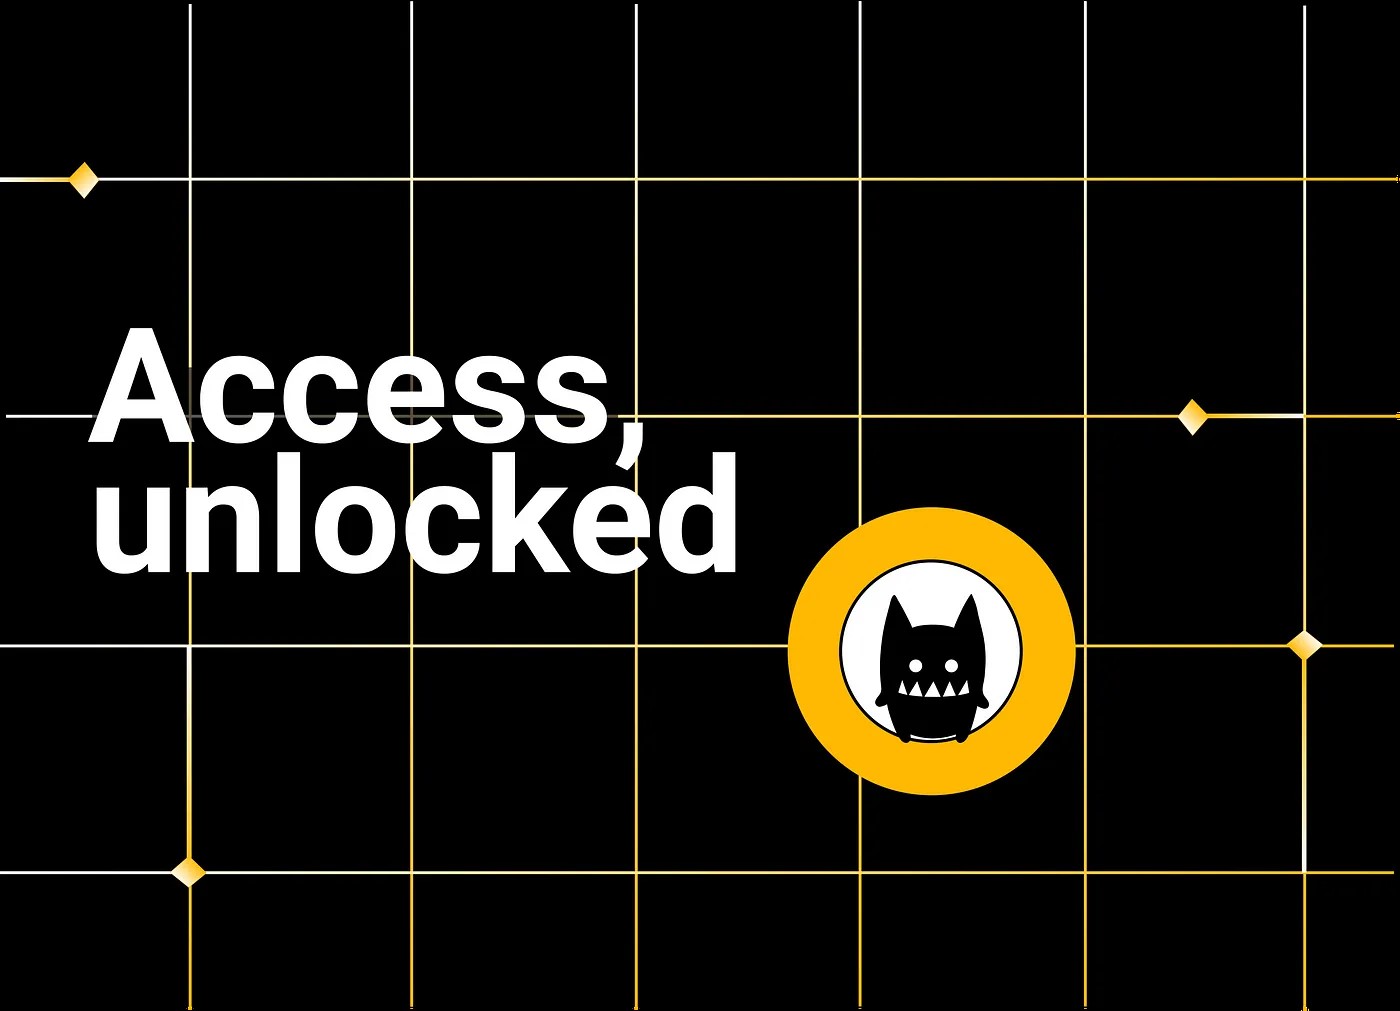 Access unlocked